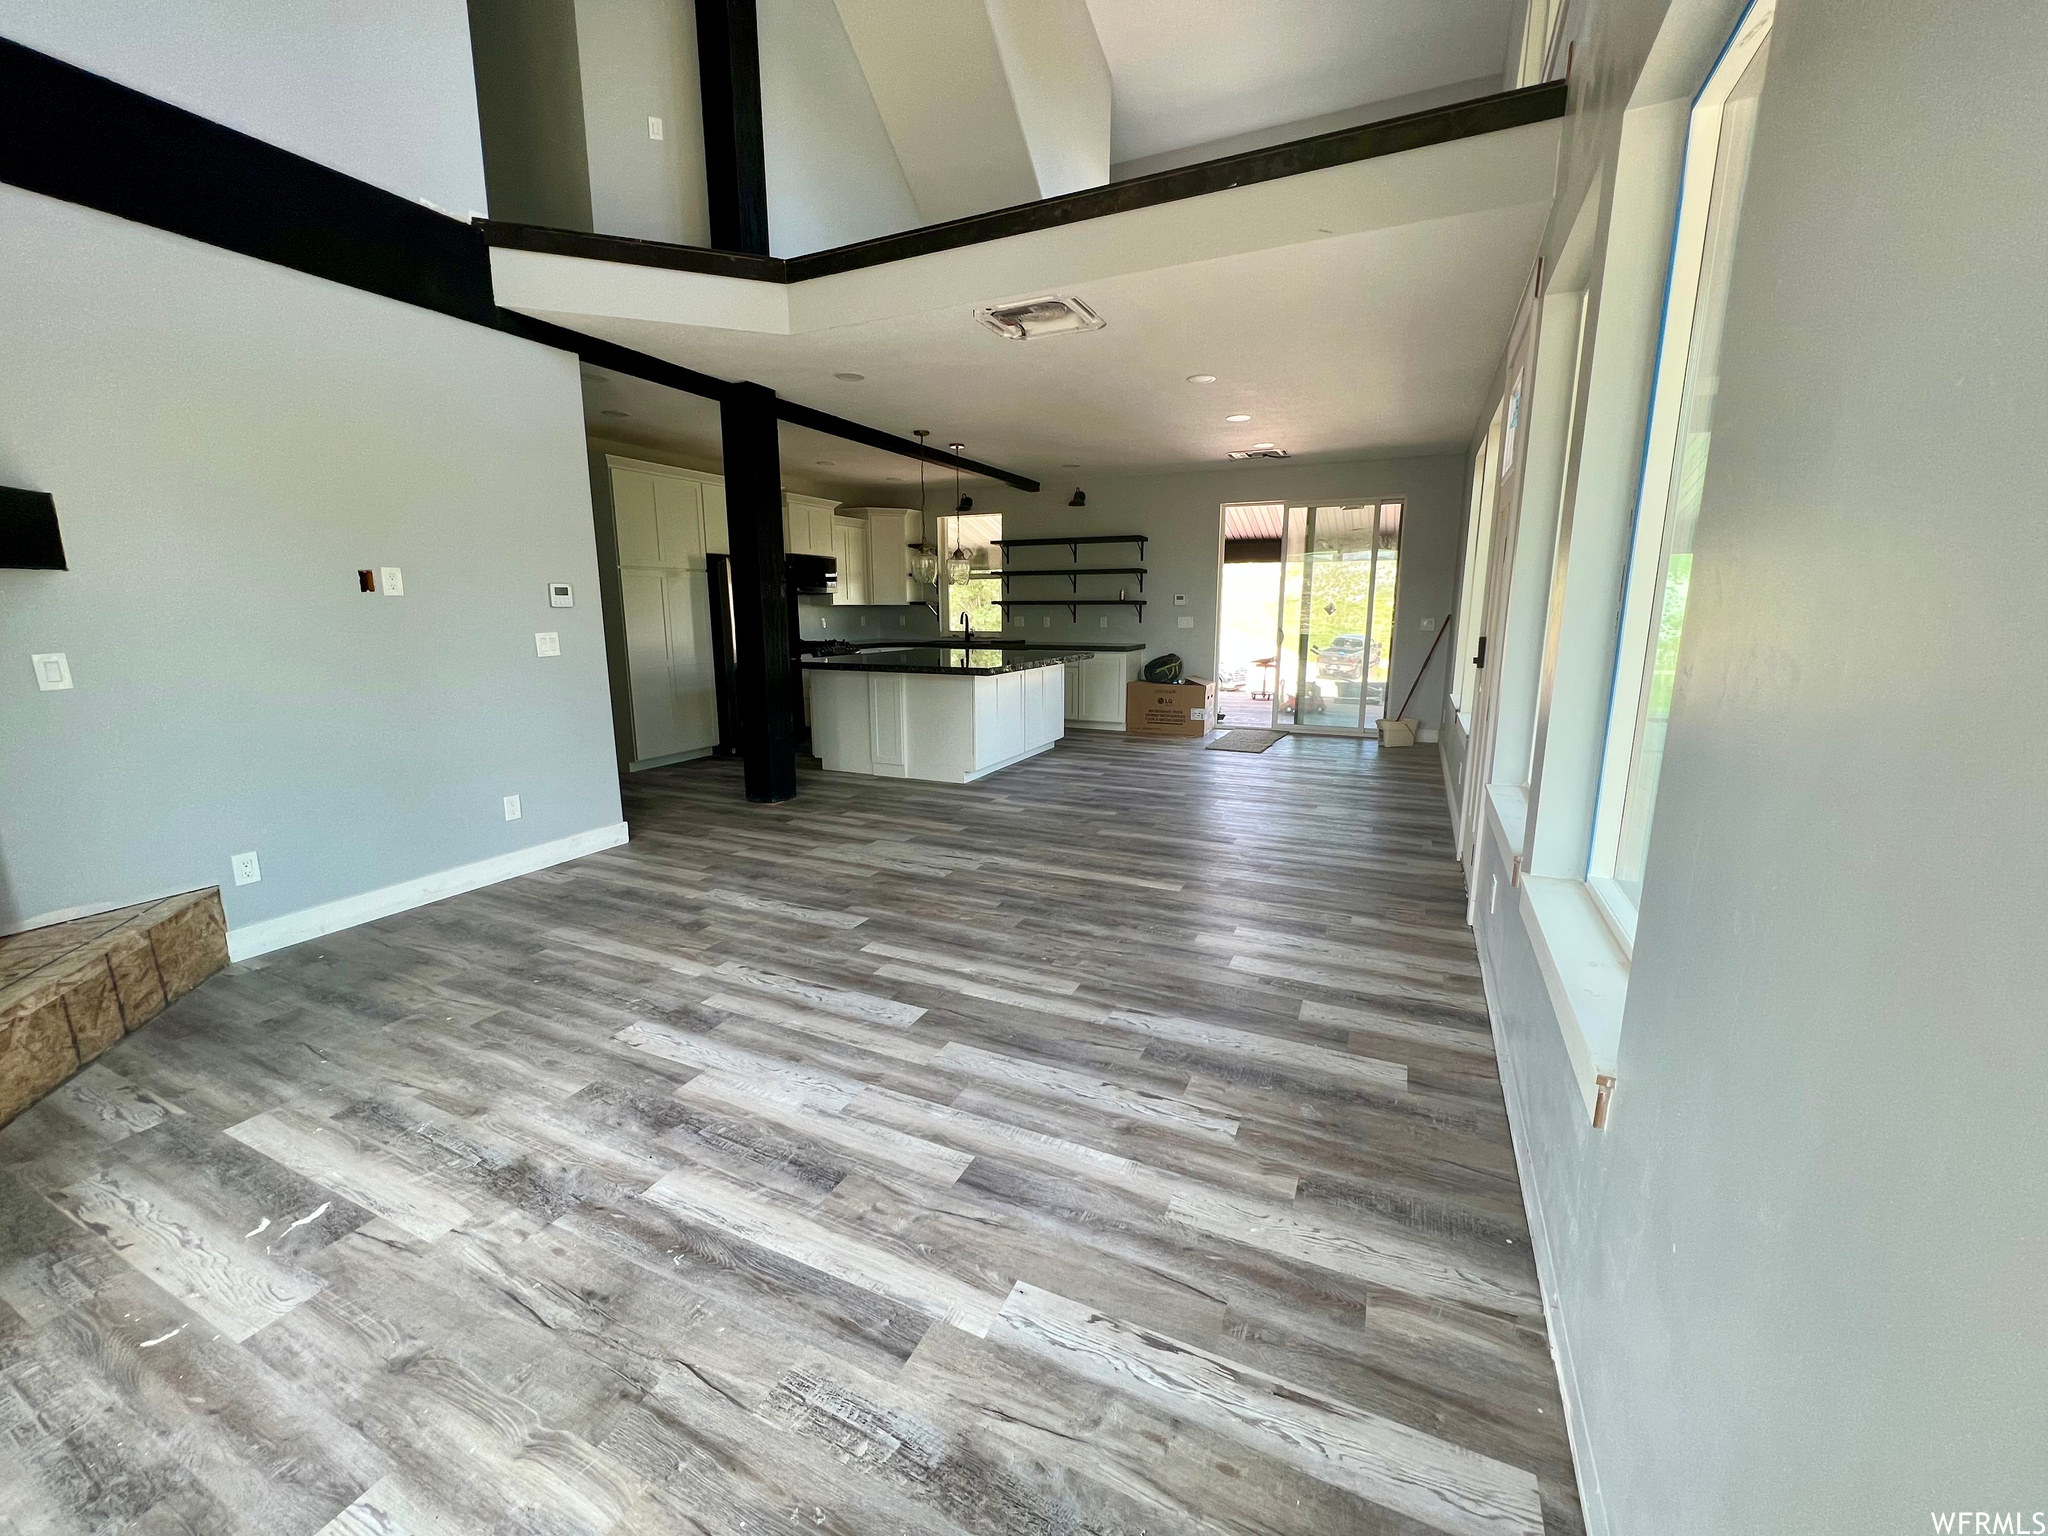 Hardwood floored living room with natural light